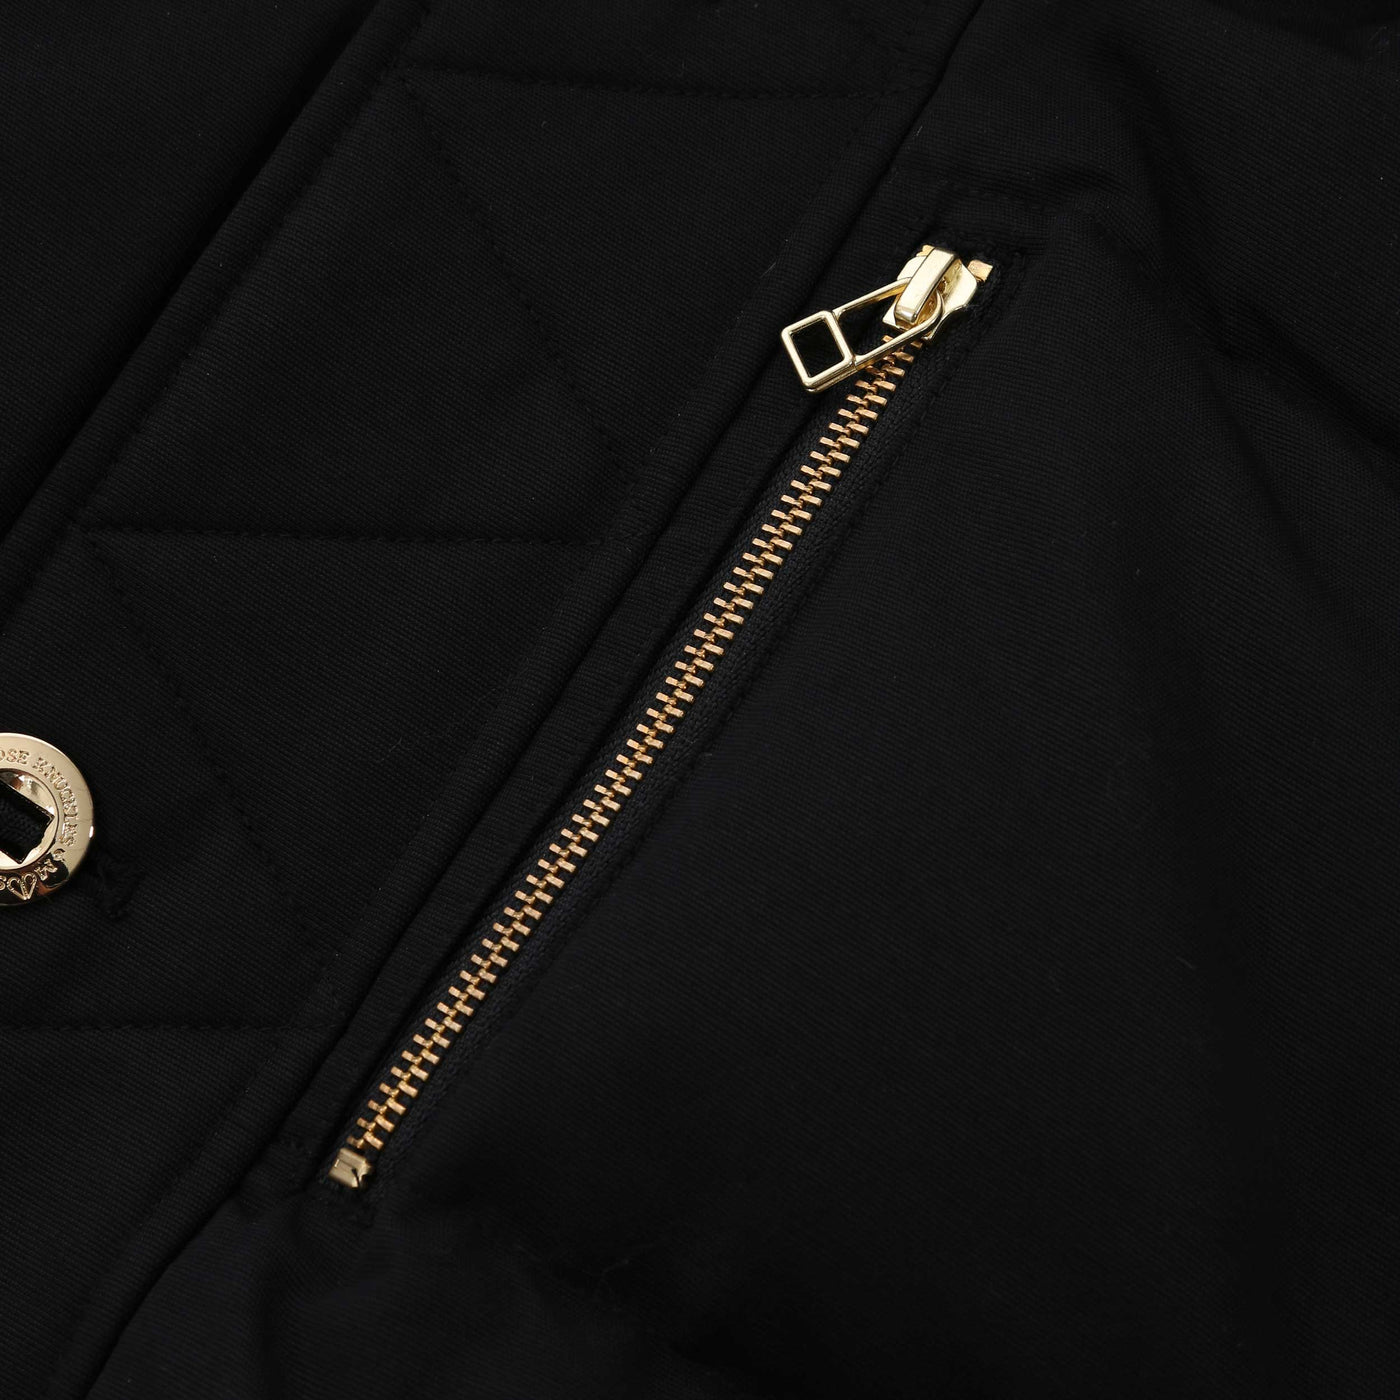 Moose Knuckles 3Q Gold Jacket in Neoshear Black zip